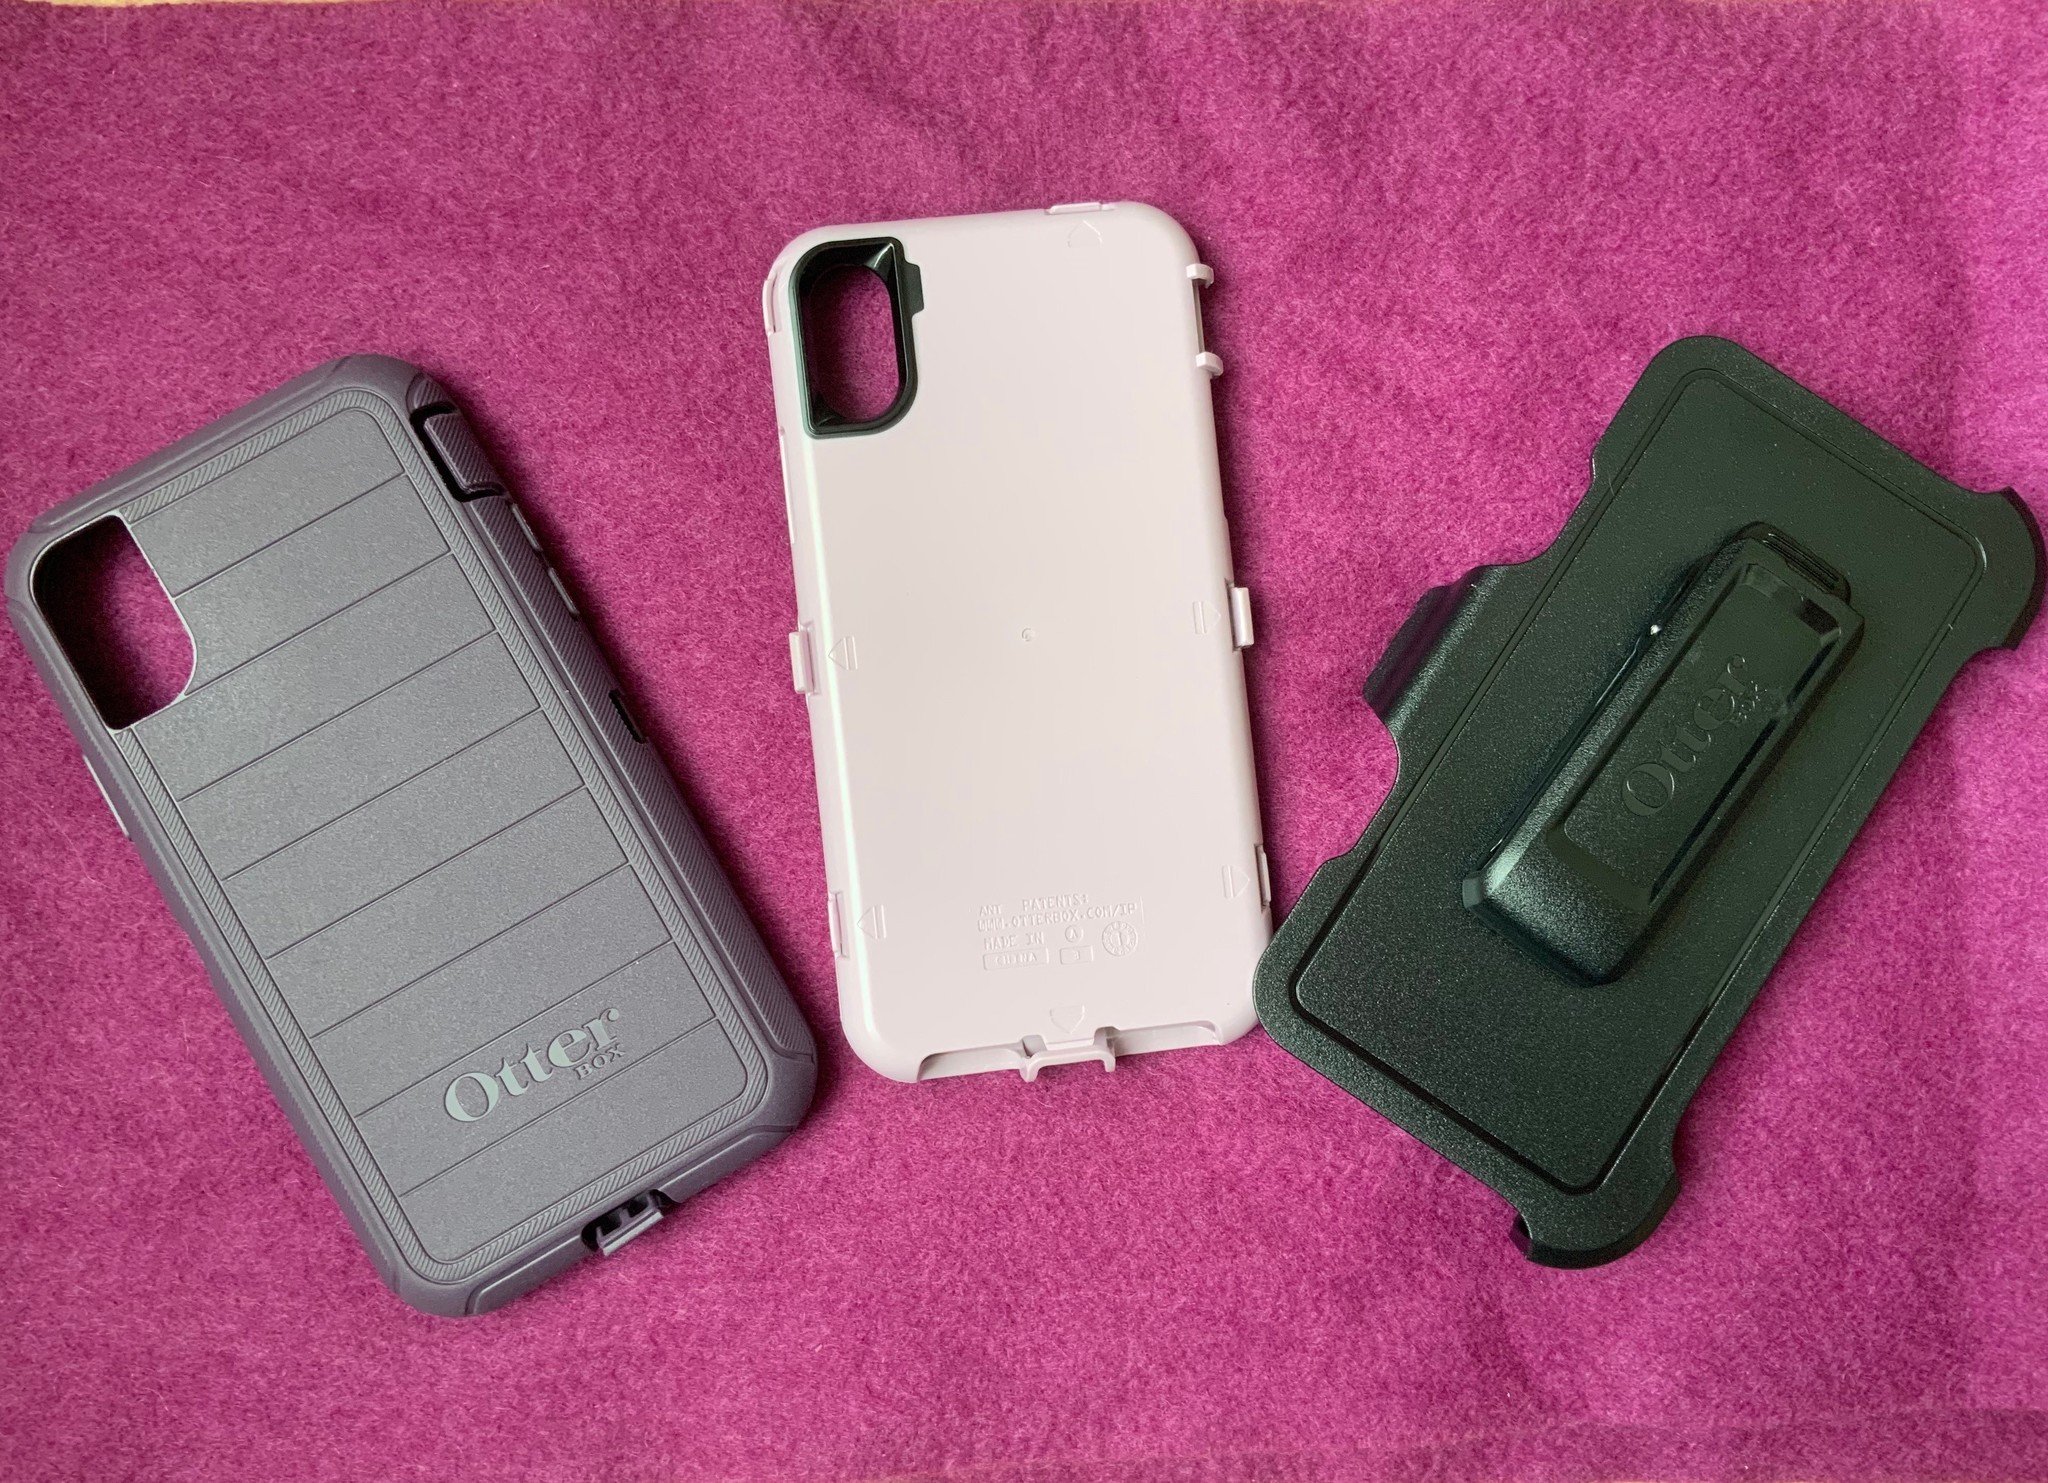 Otterbox Defender Series Pro iphone case